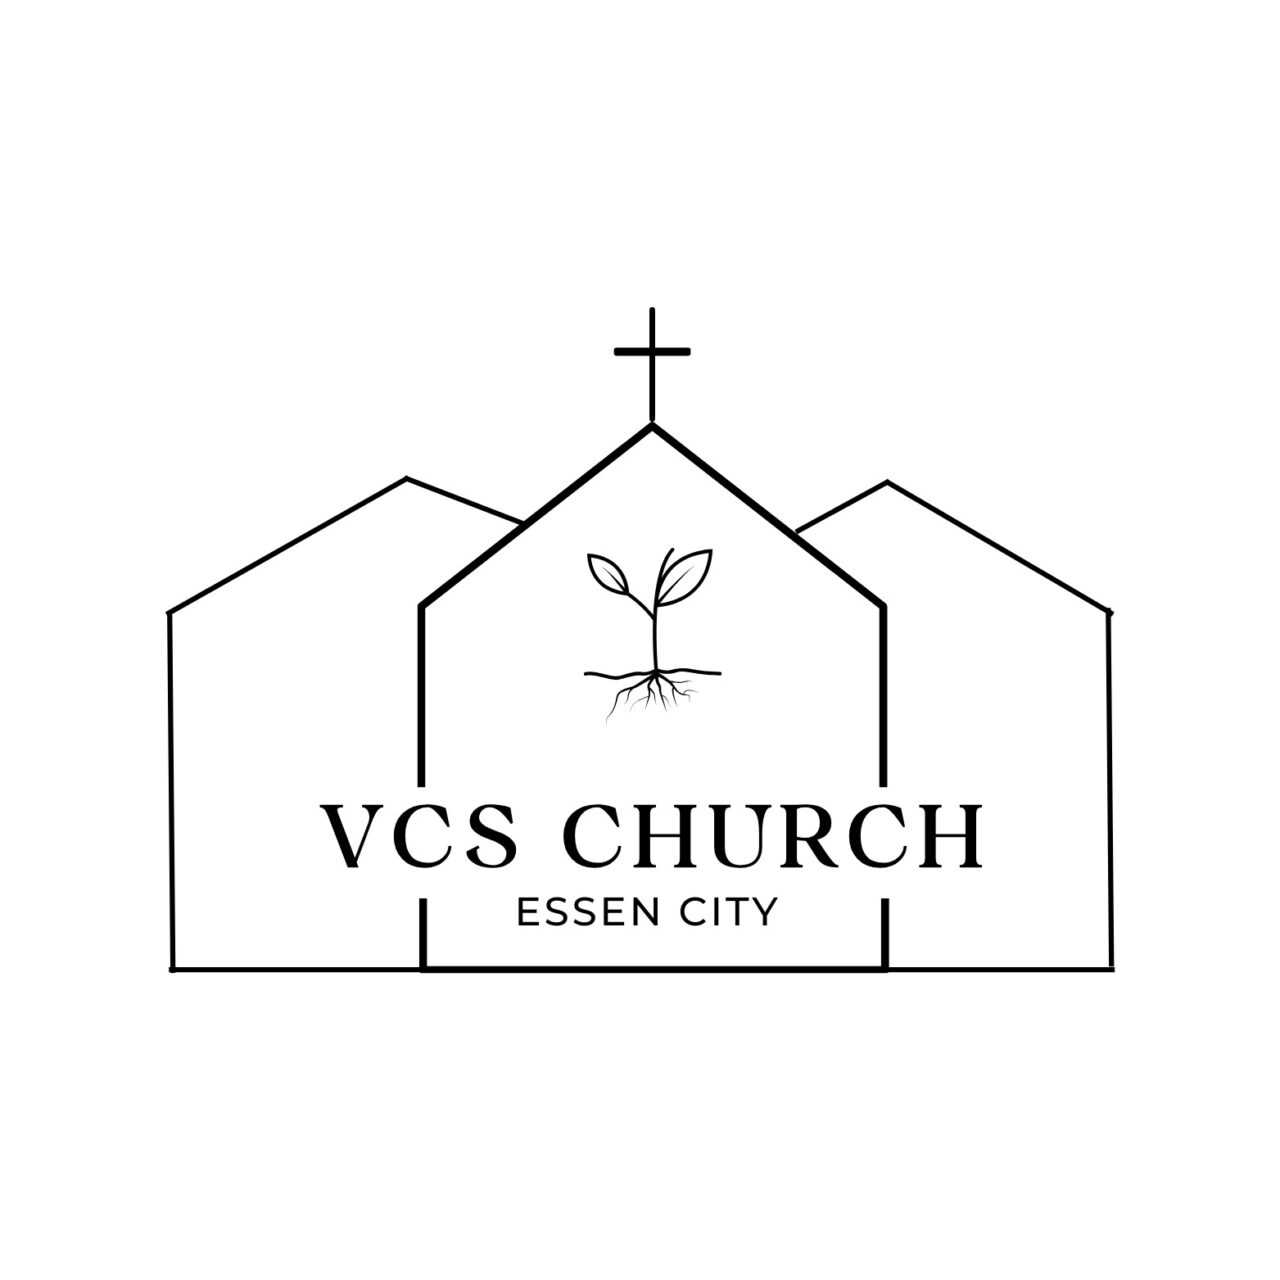 VCS Church Essen City